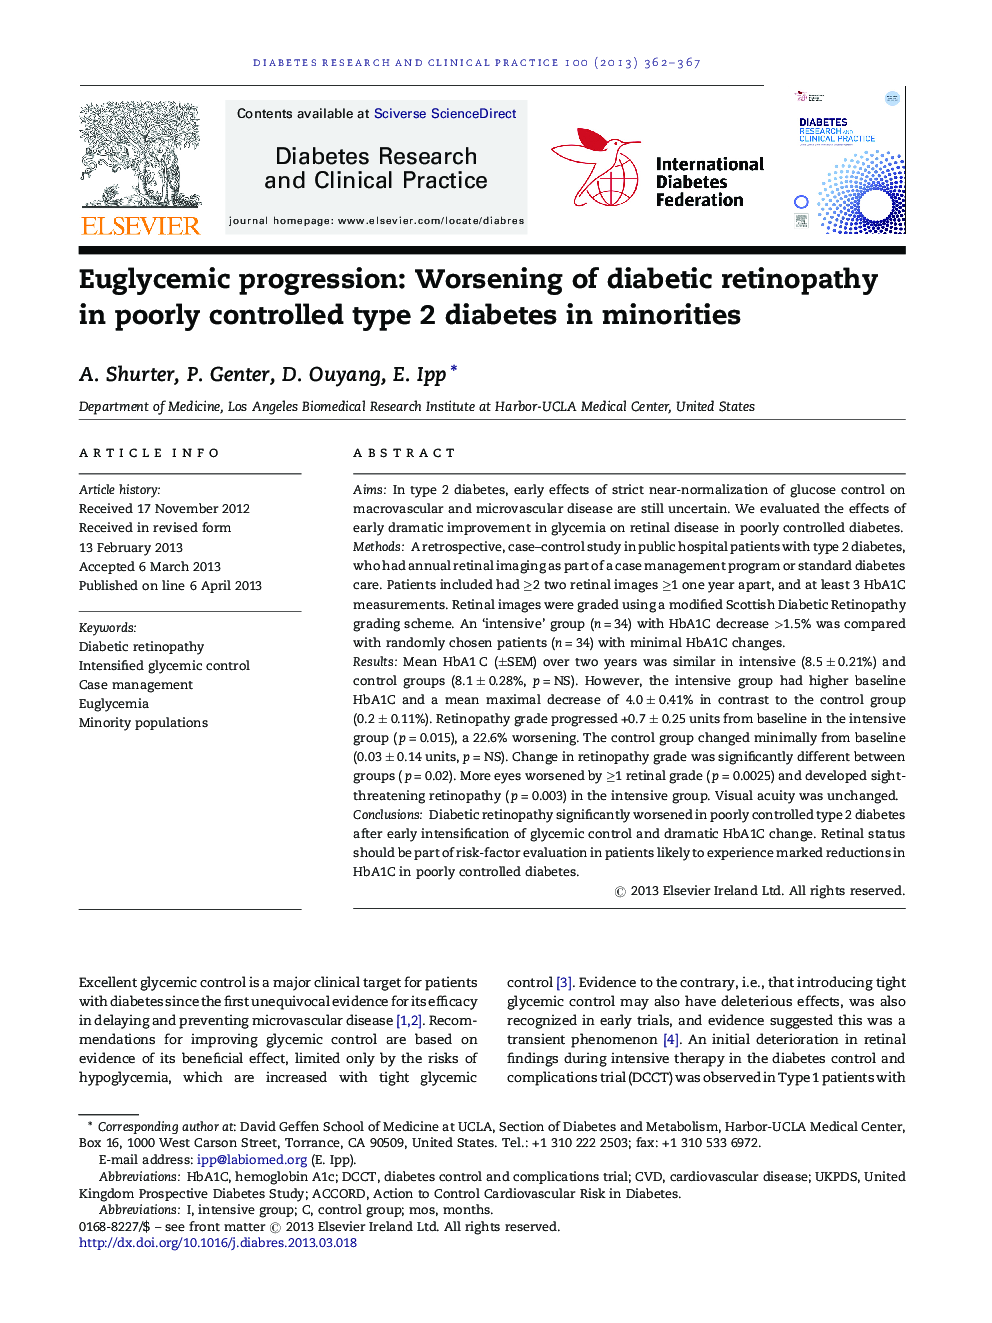 Euglycemic progression: Worsening of diabetic retinopathy in poorly controlled type 2 diabetes in minorities